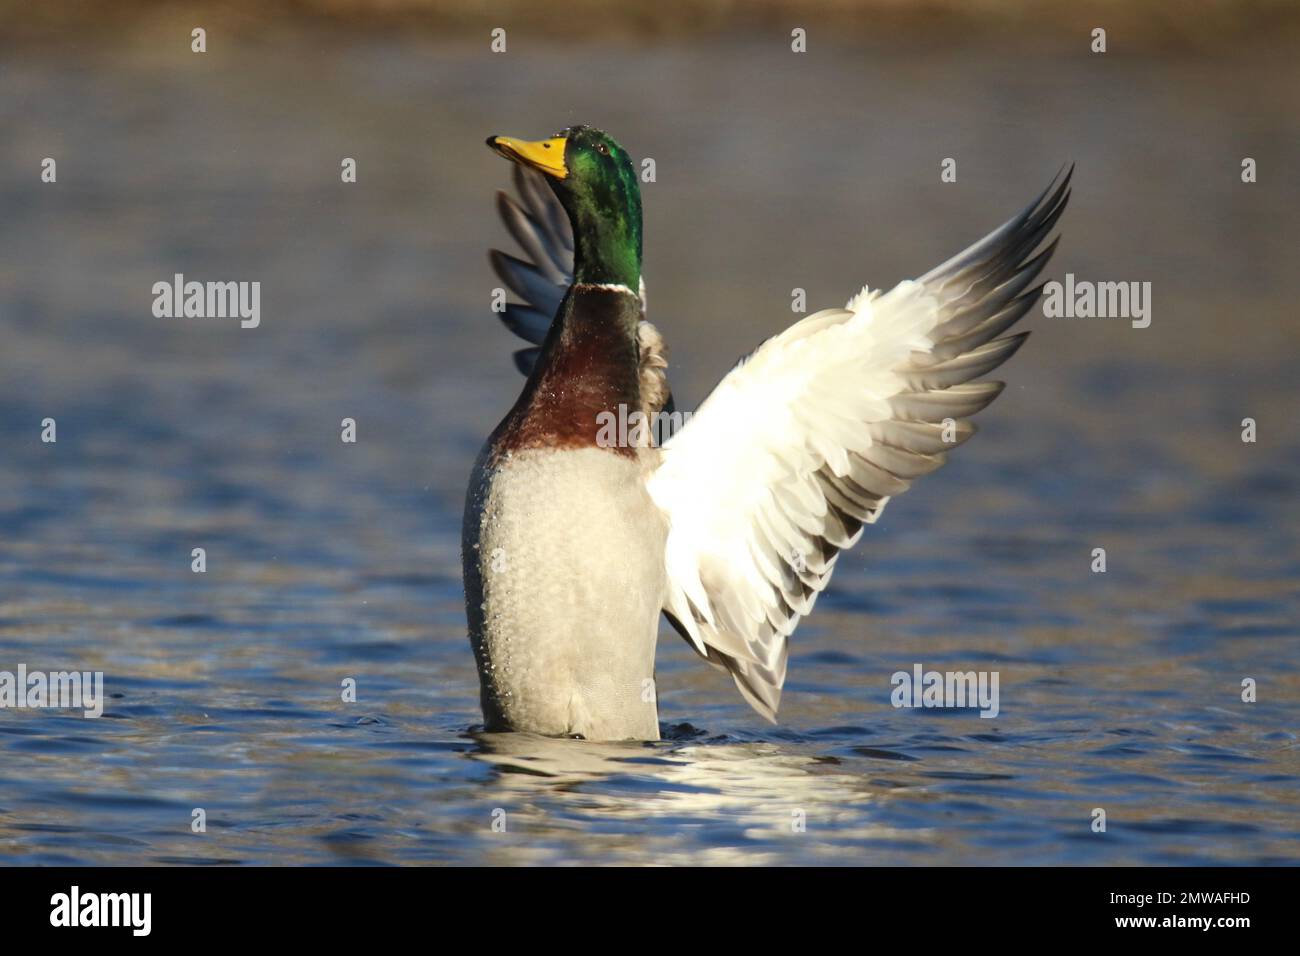 Drake mallard anatra Anas platyrhynchos flapping le sue vincite su un lago in inverno Foto Stock